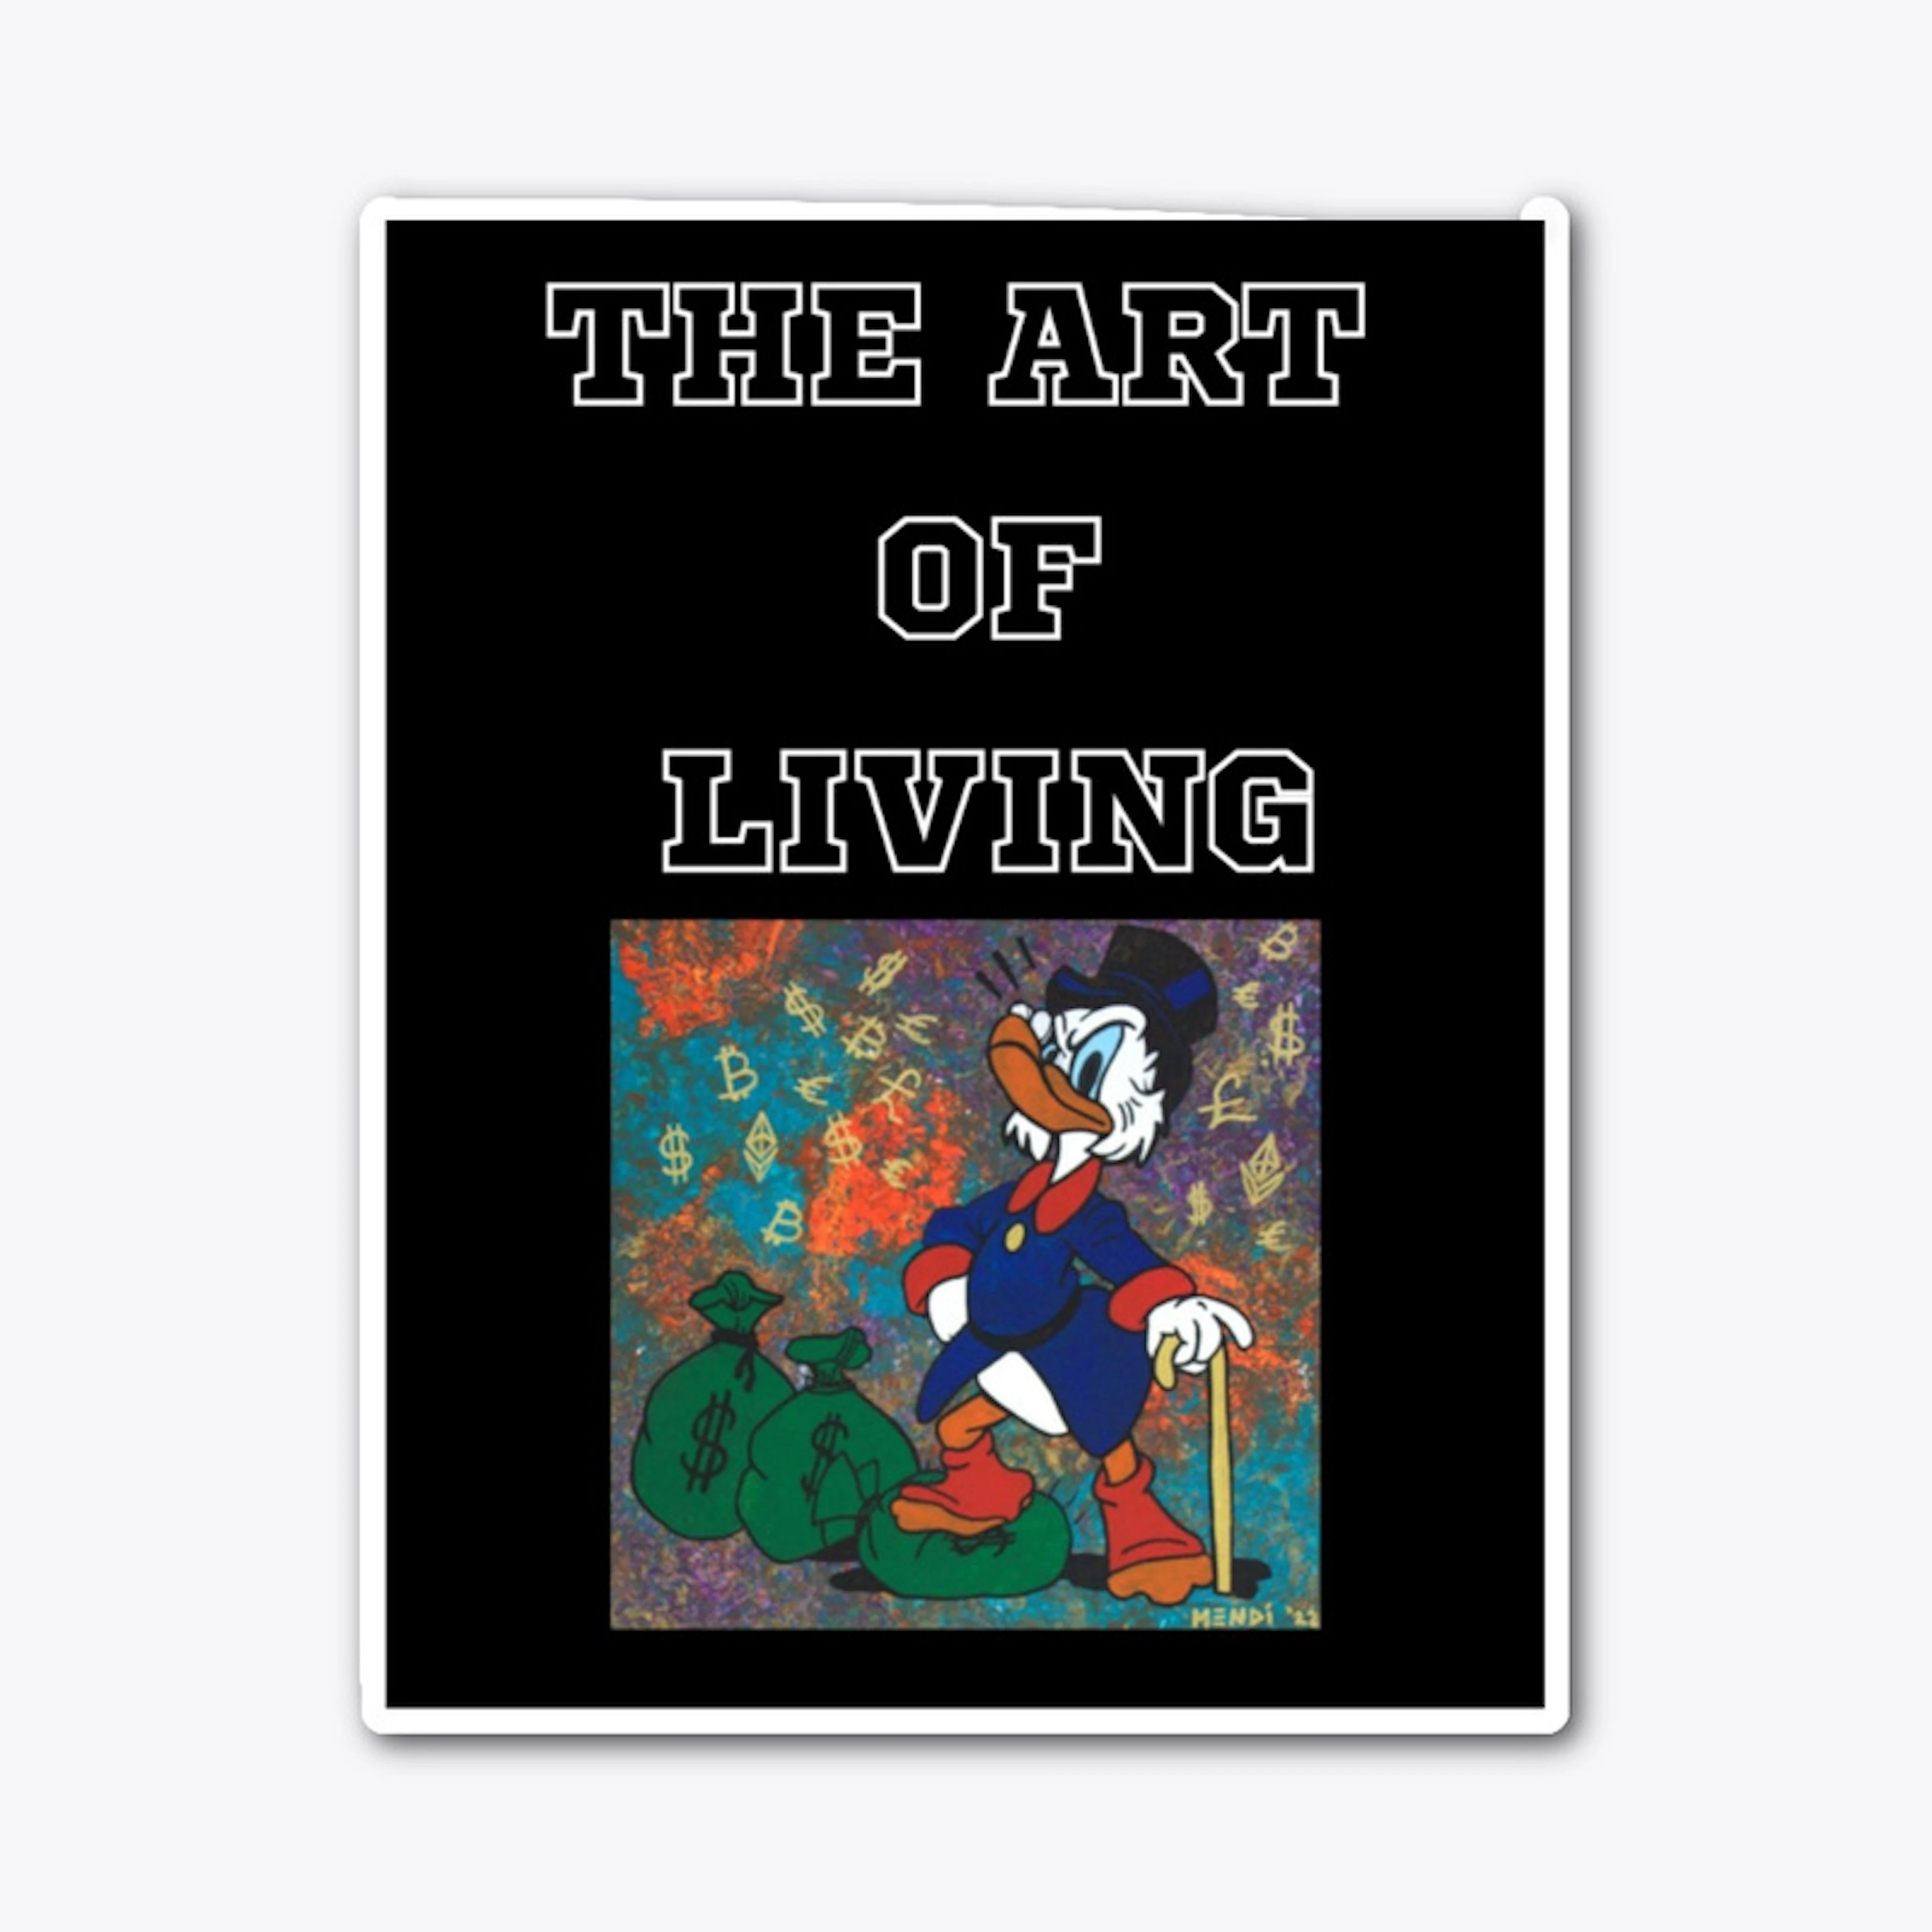 The Art Of Living